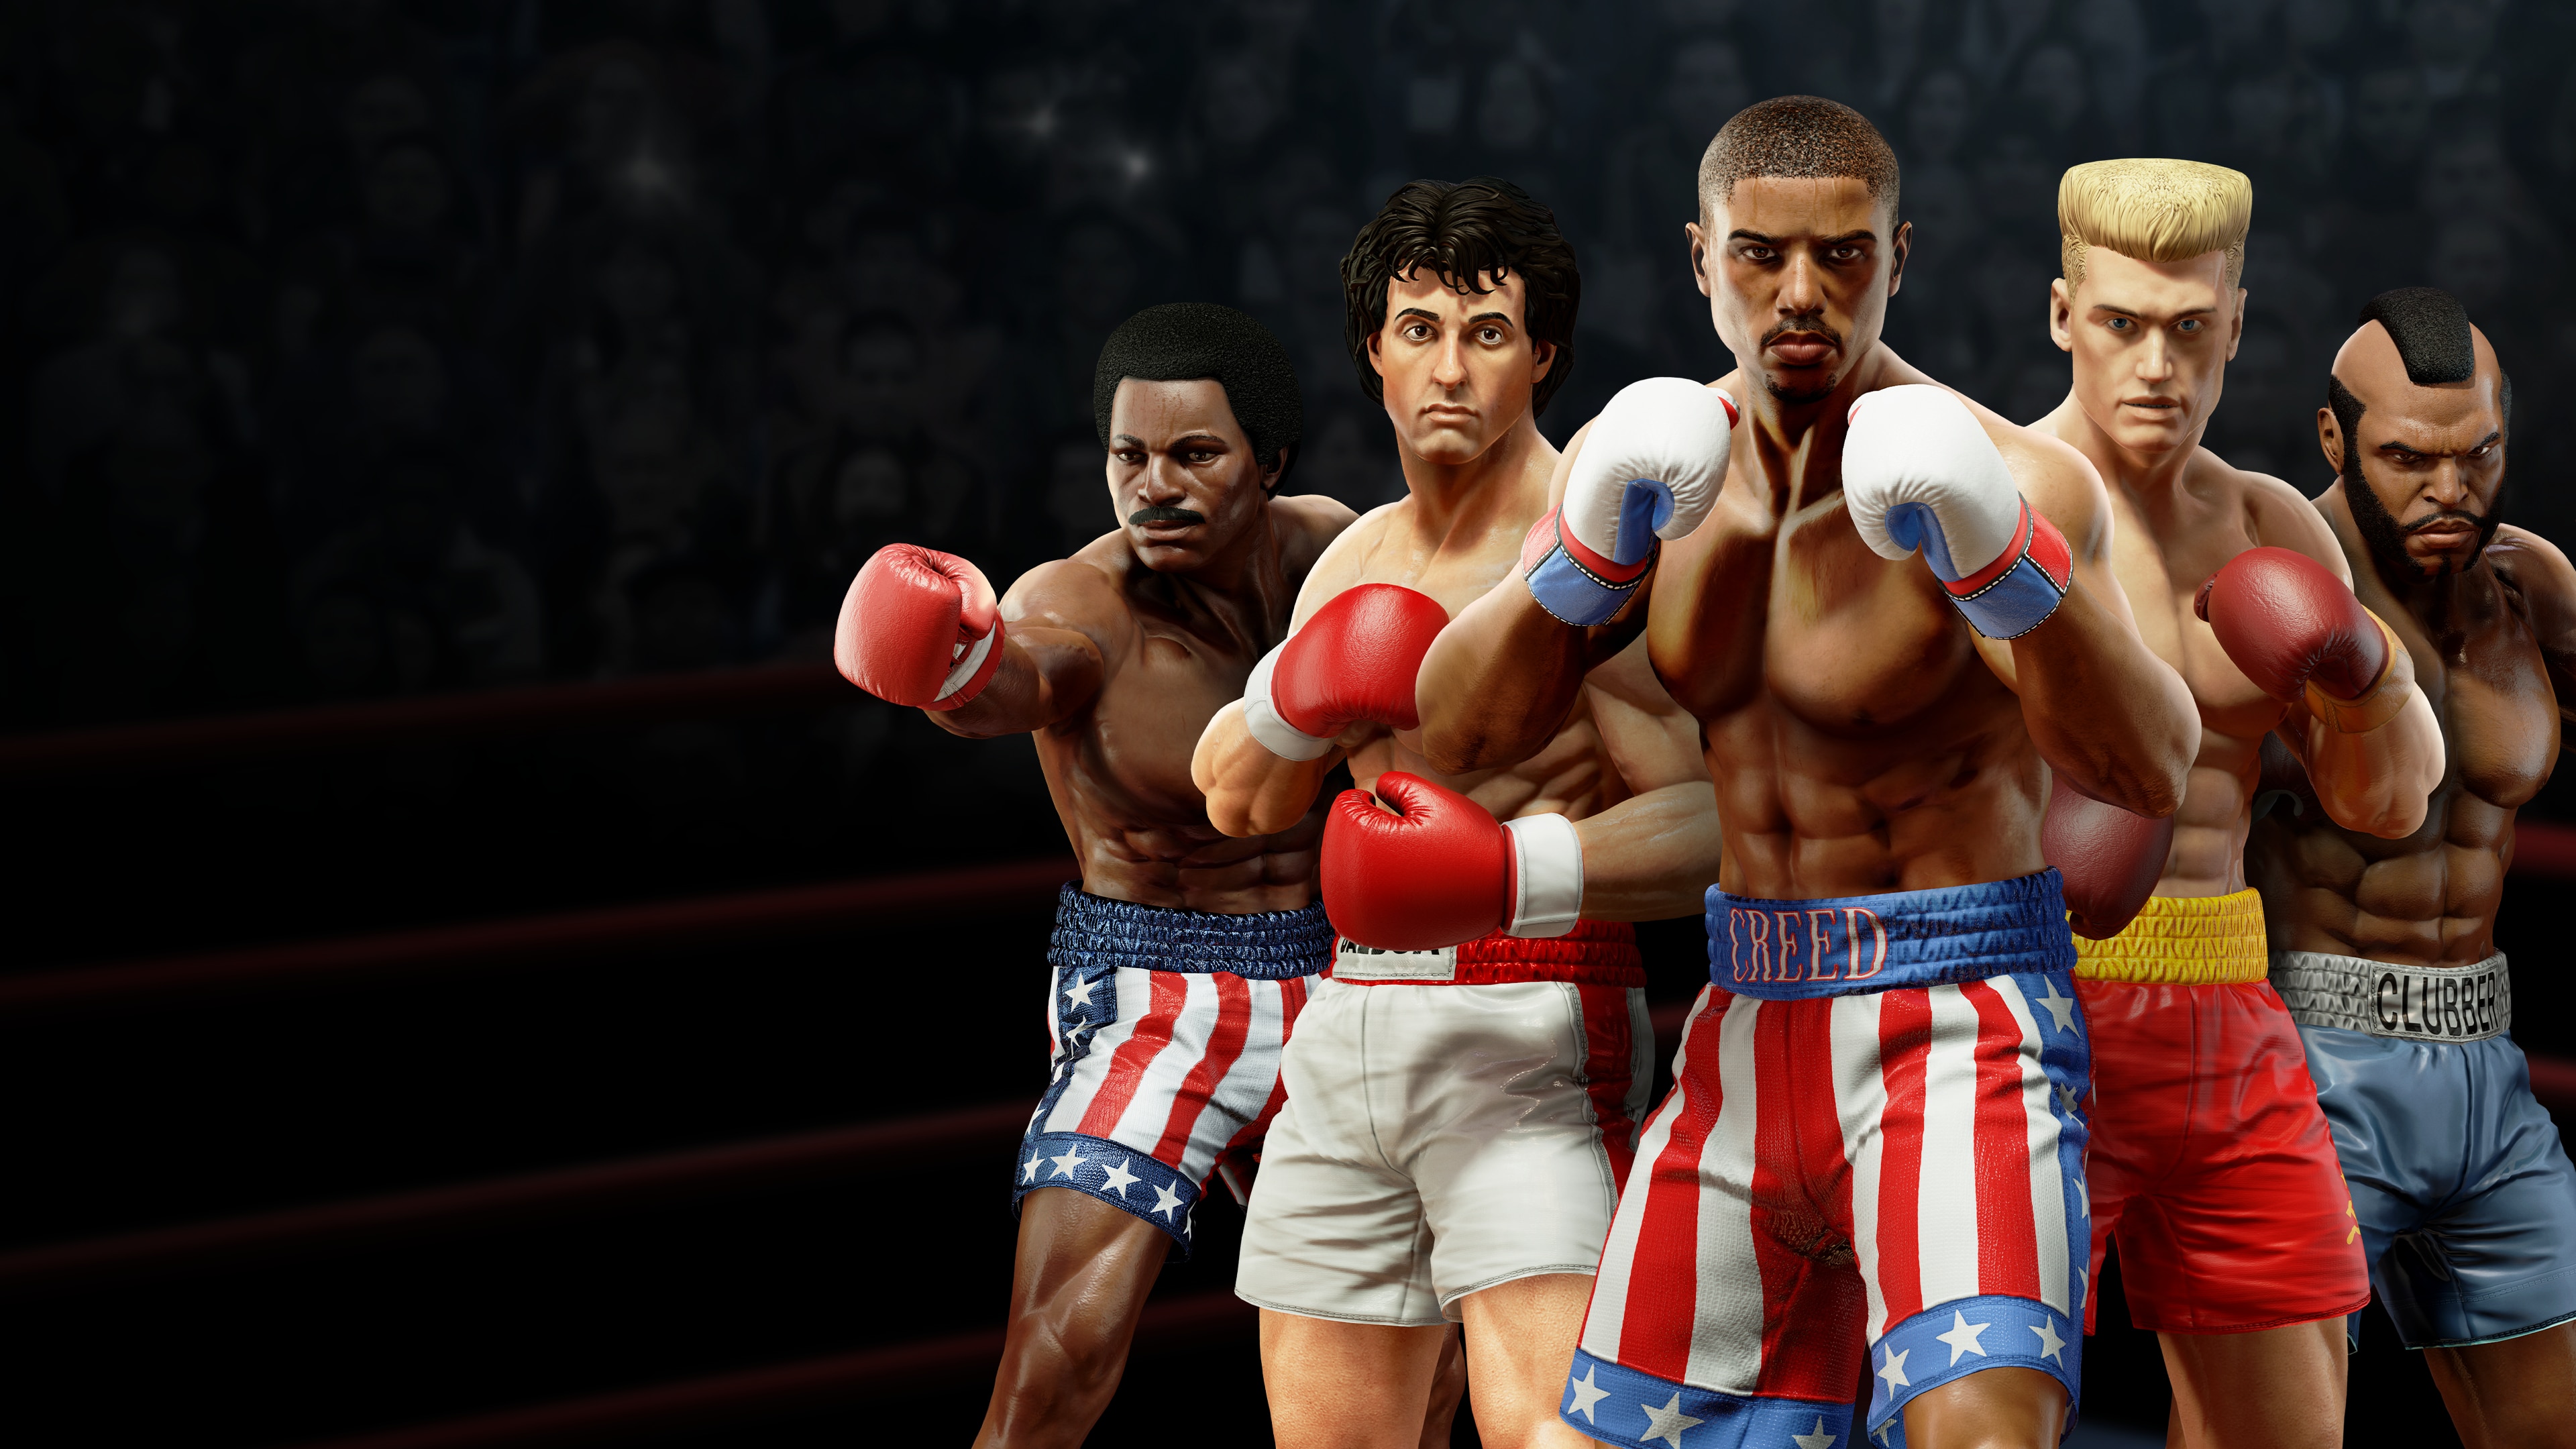 Adonis Creed Big Rumble Boxing Wallpapers